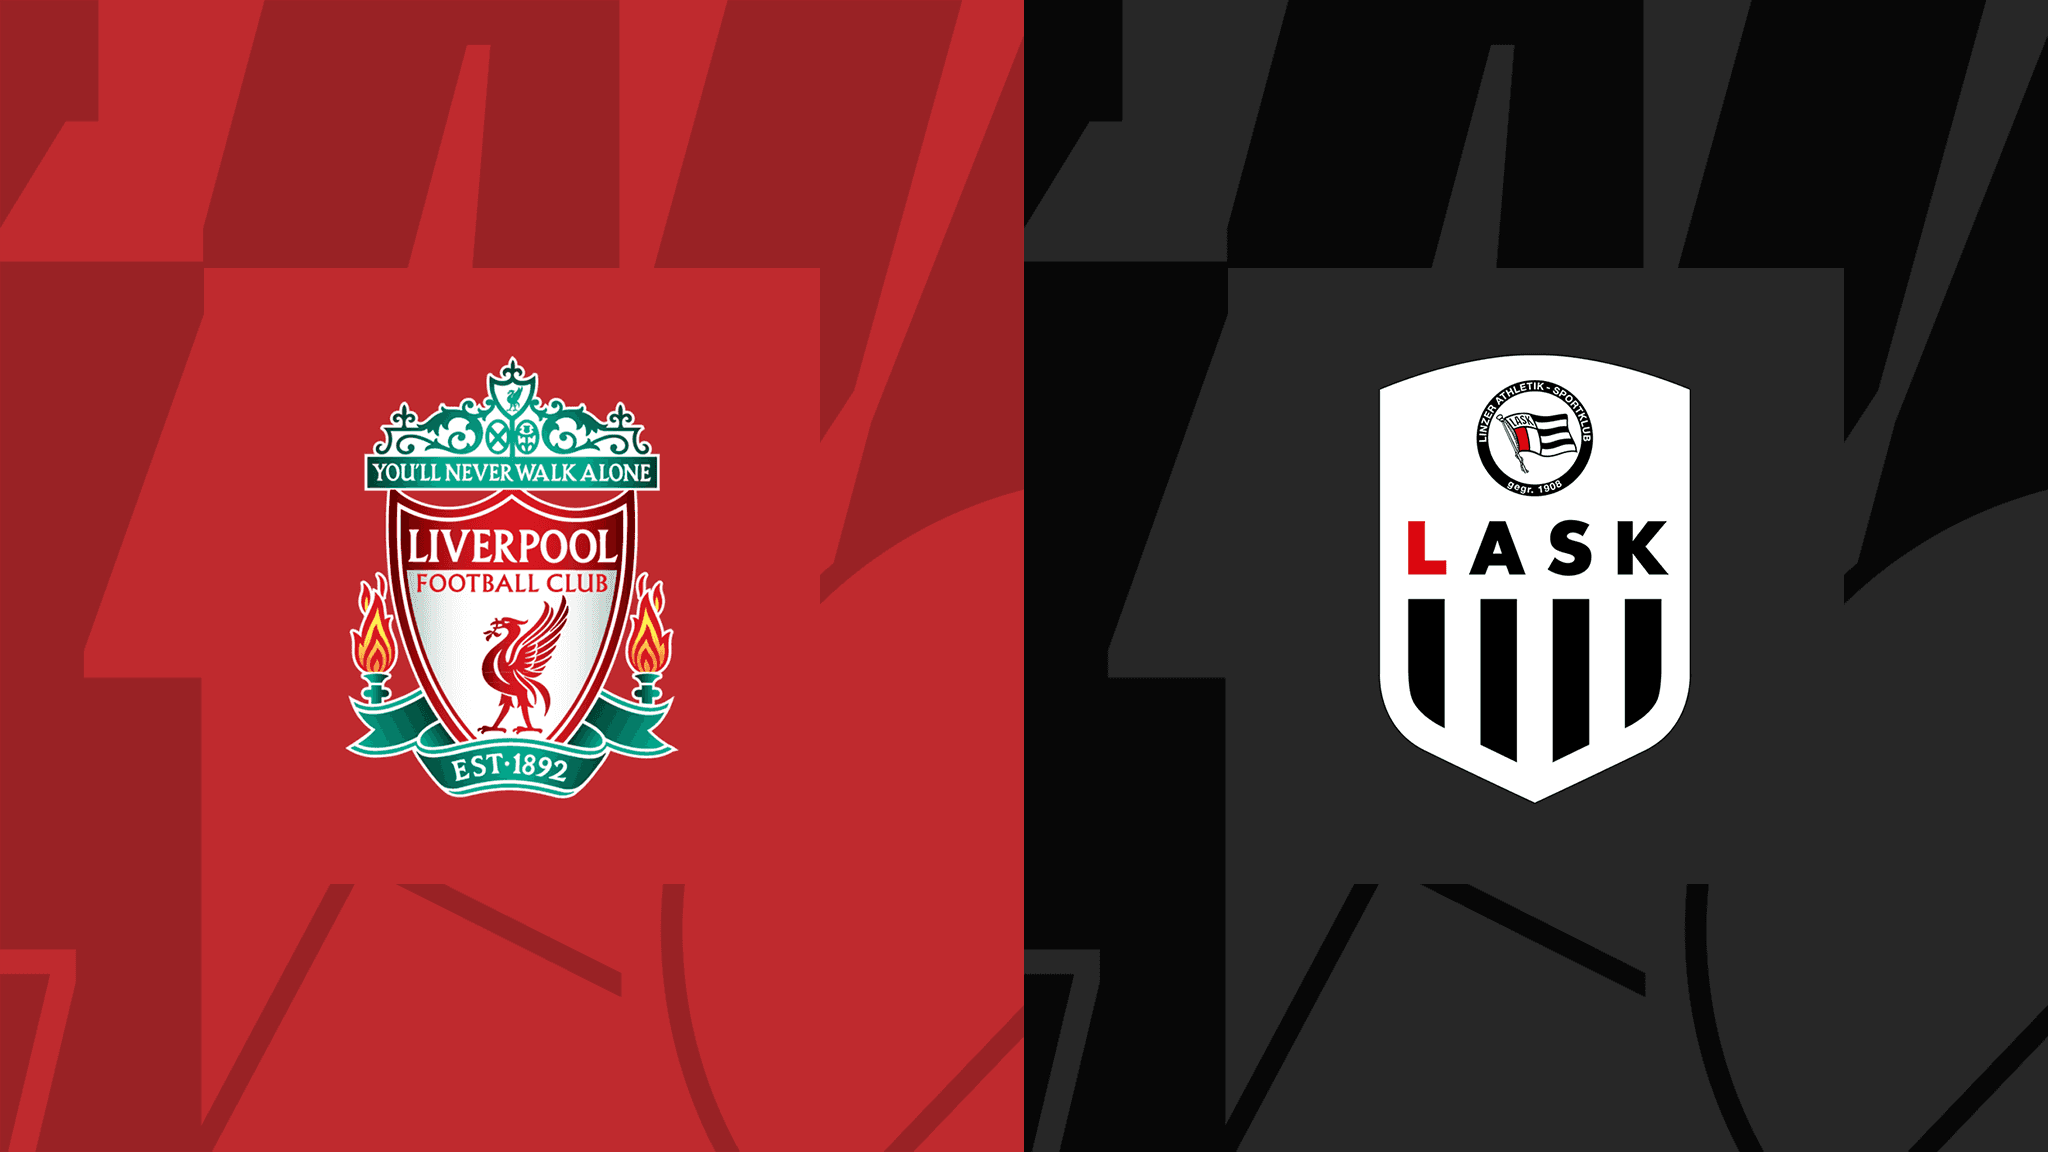 Liverpool vs LASK